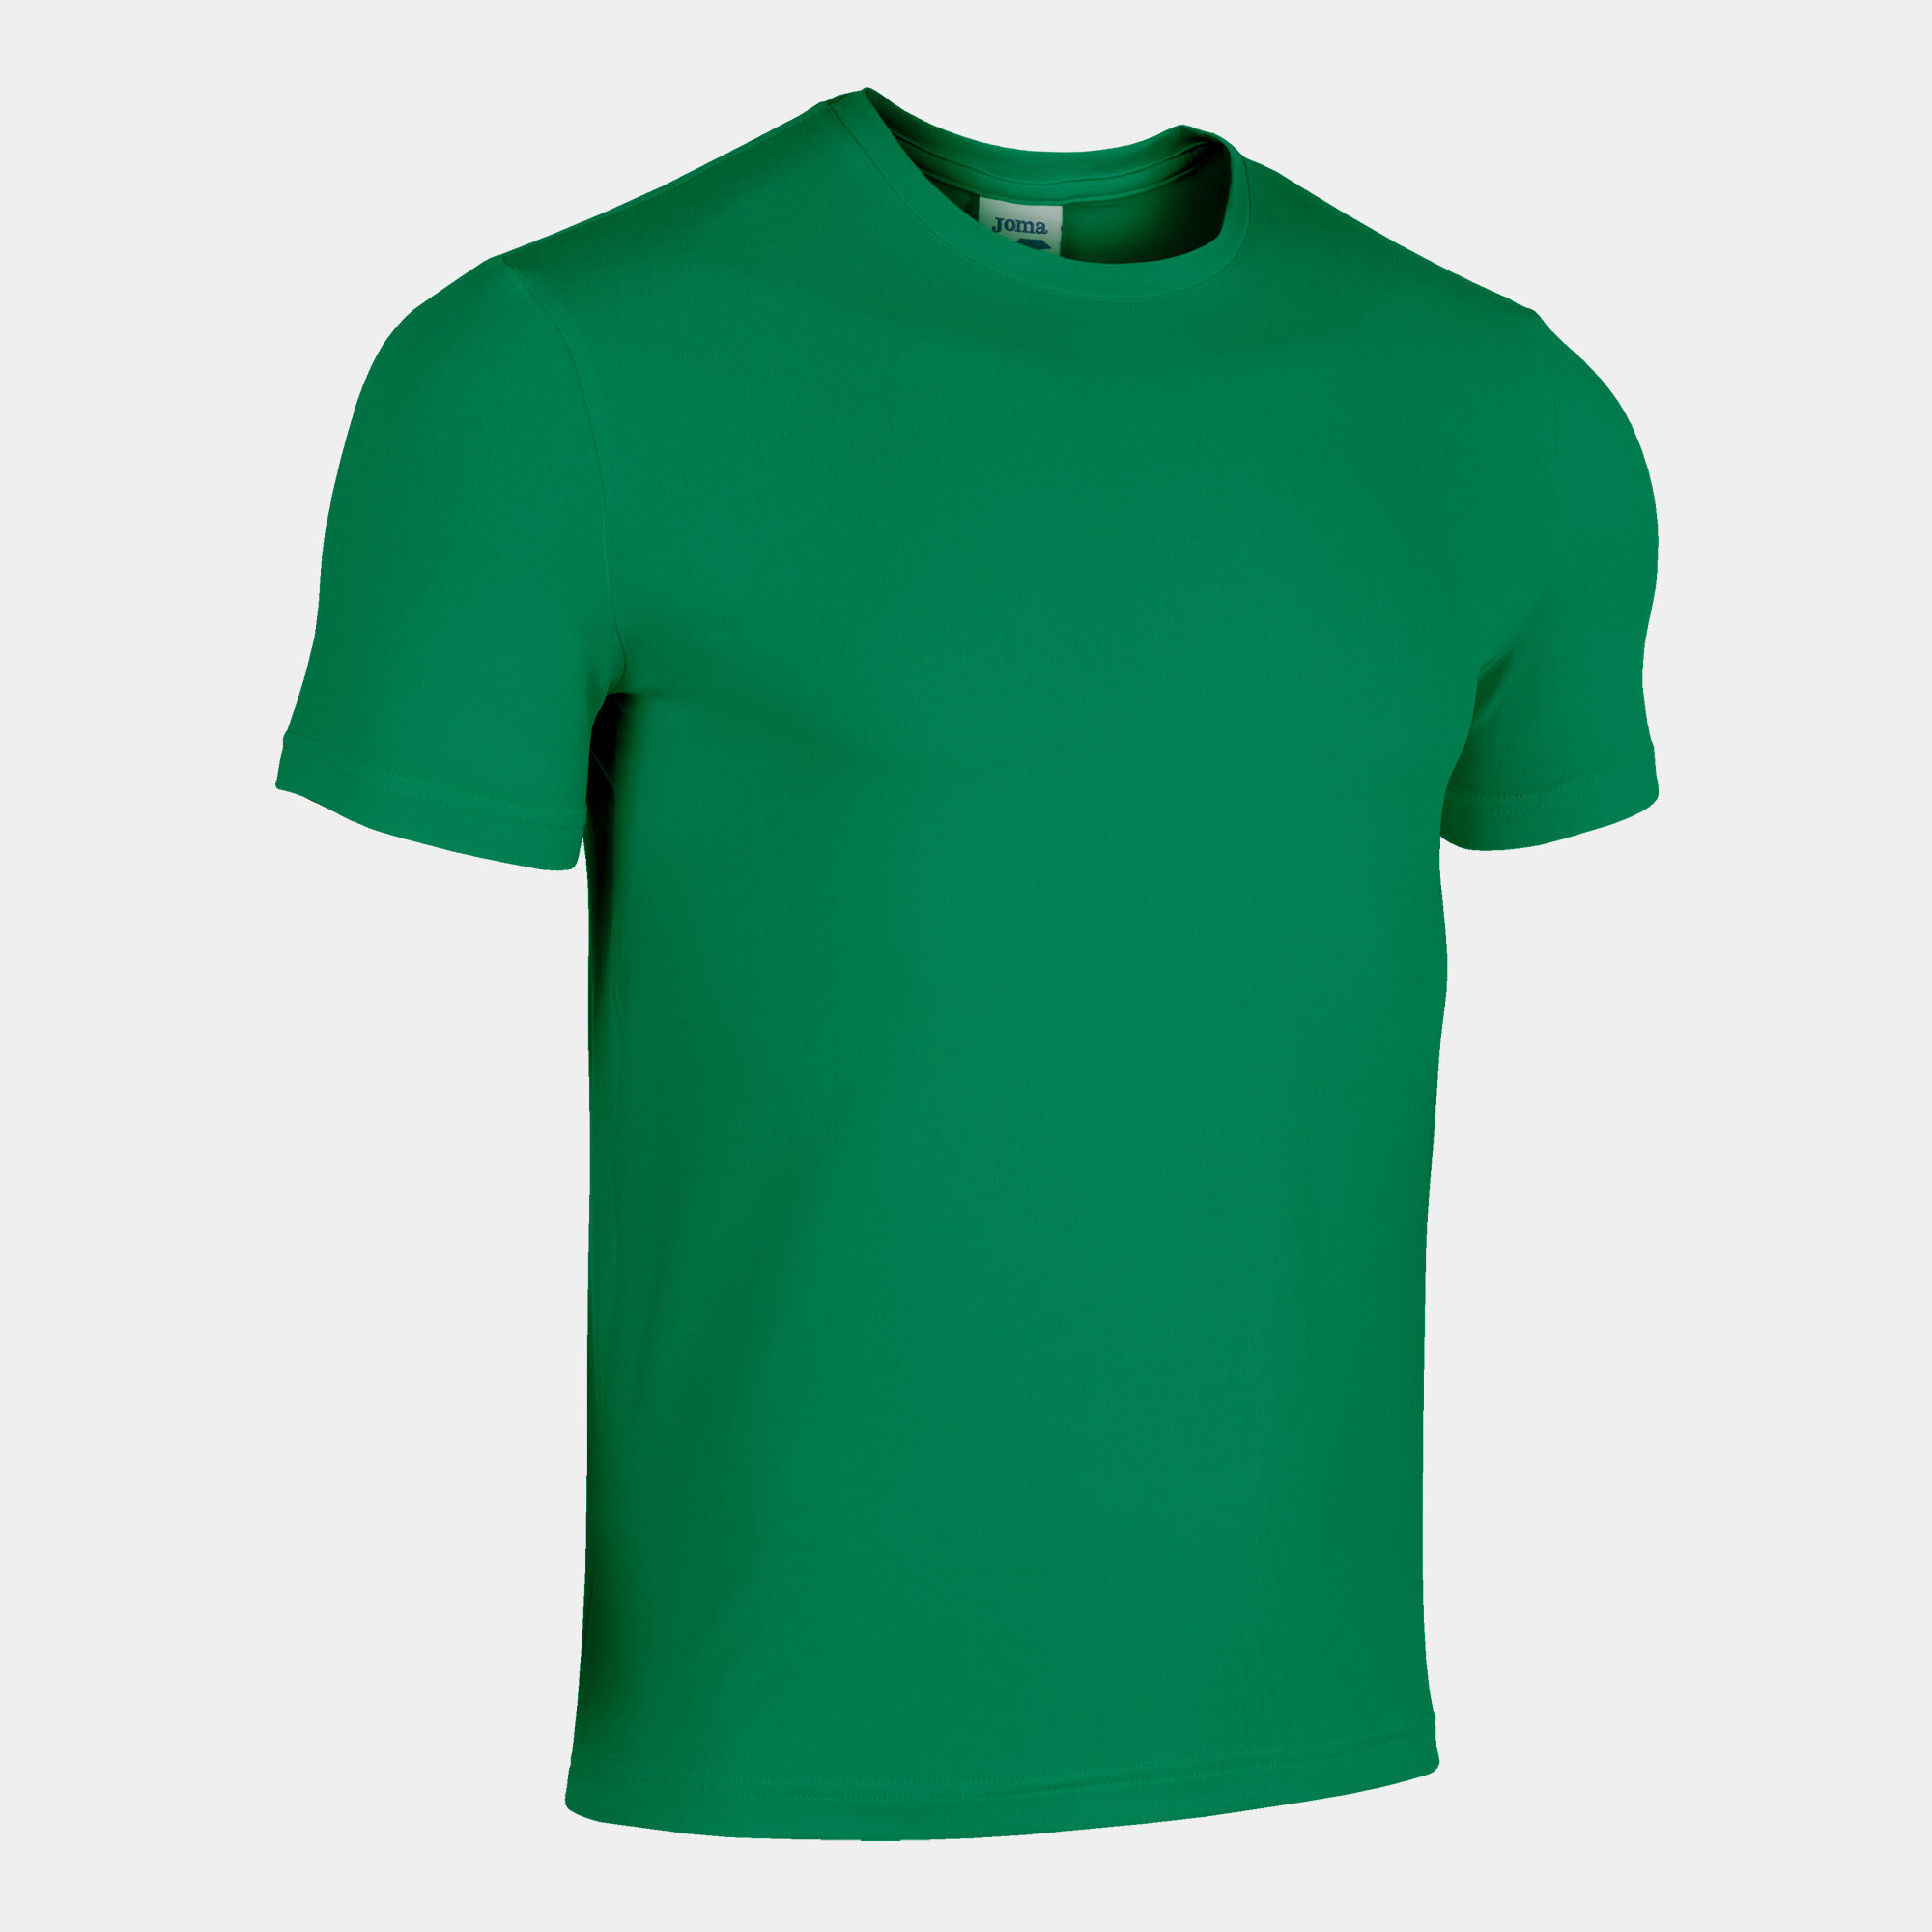 Shirt short sleeve man Sydney green